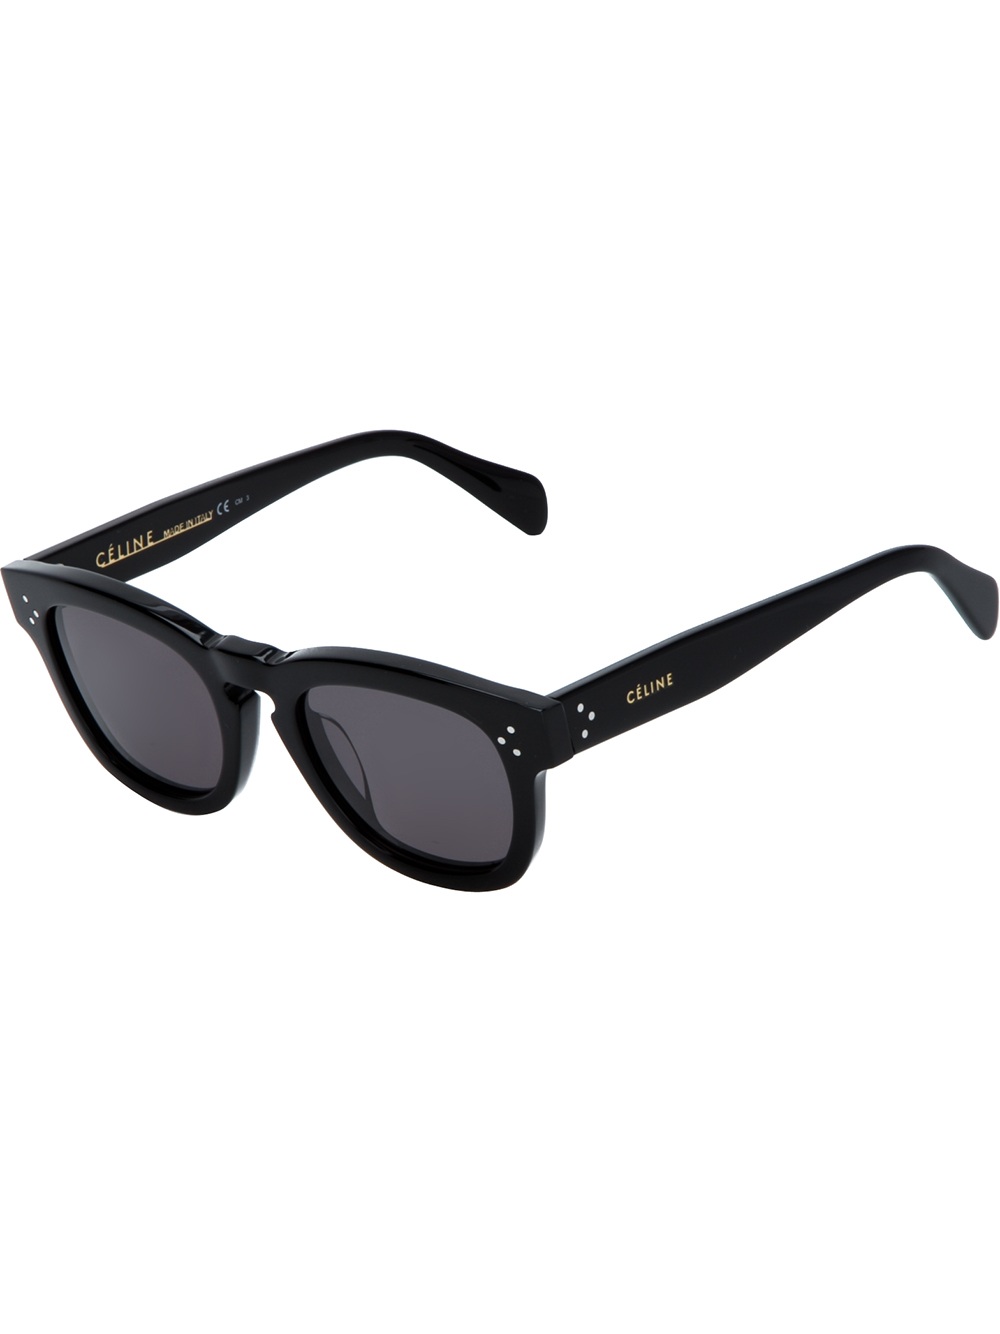 Celine Tailor Sunglasses in Black - Lyst